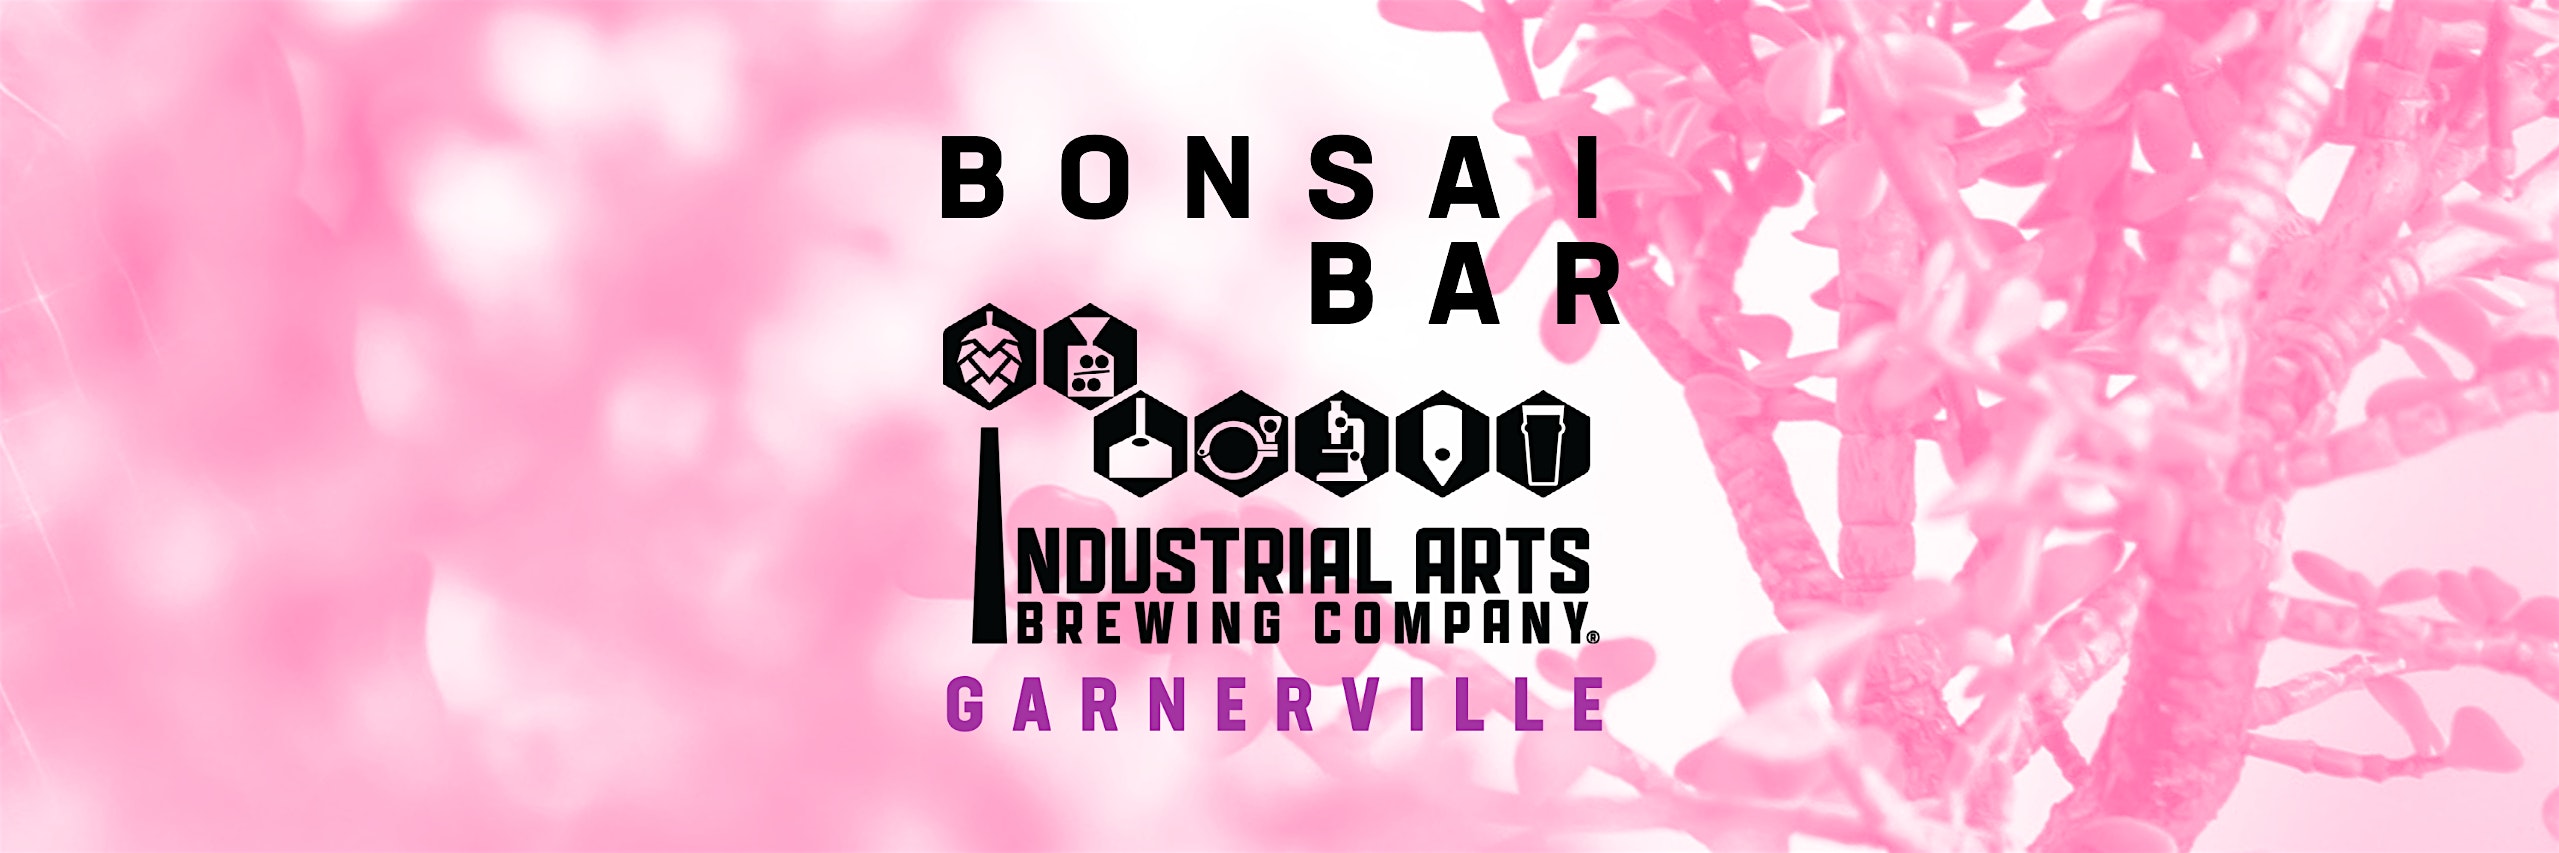 Bonsai Bar @ Industrial Arts Brewing Company – Garnerville